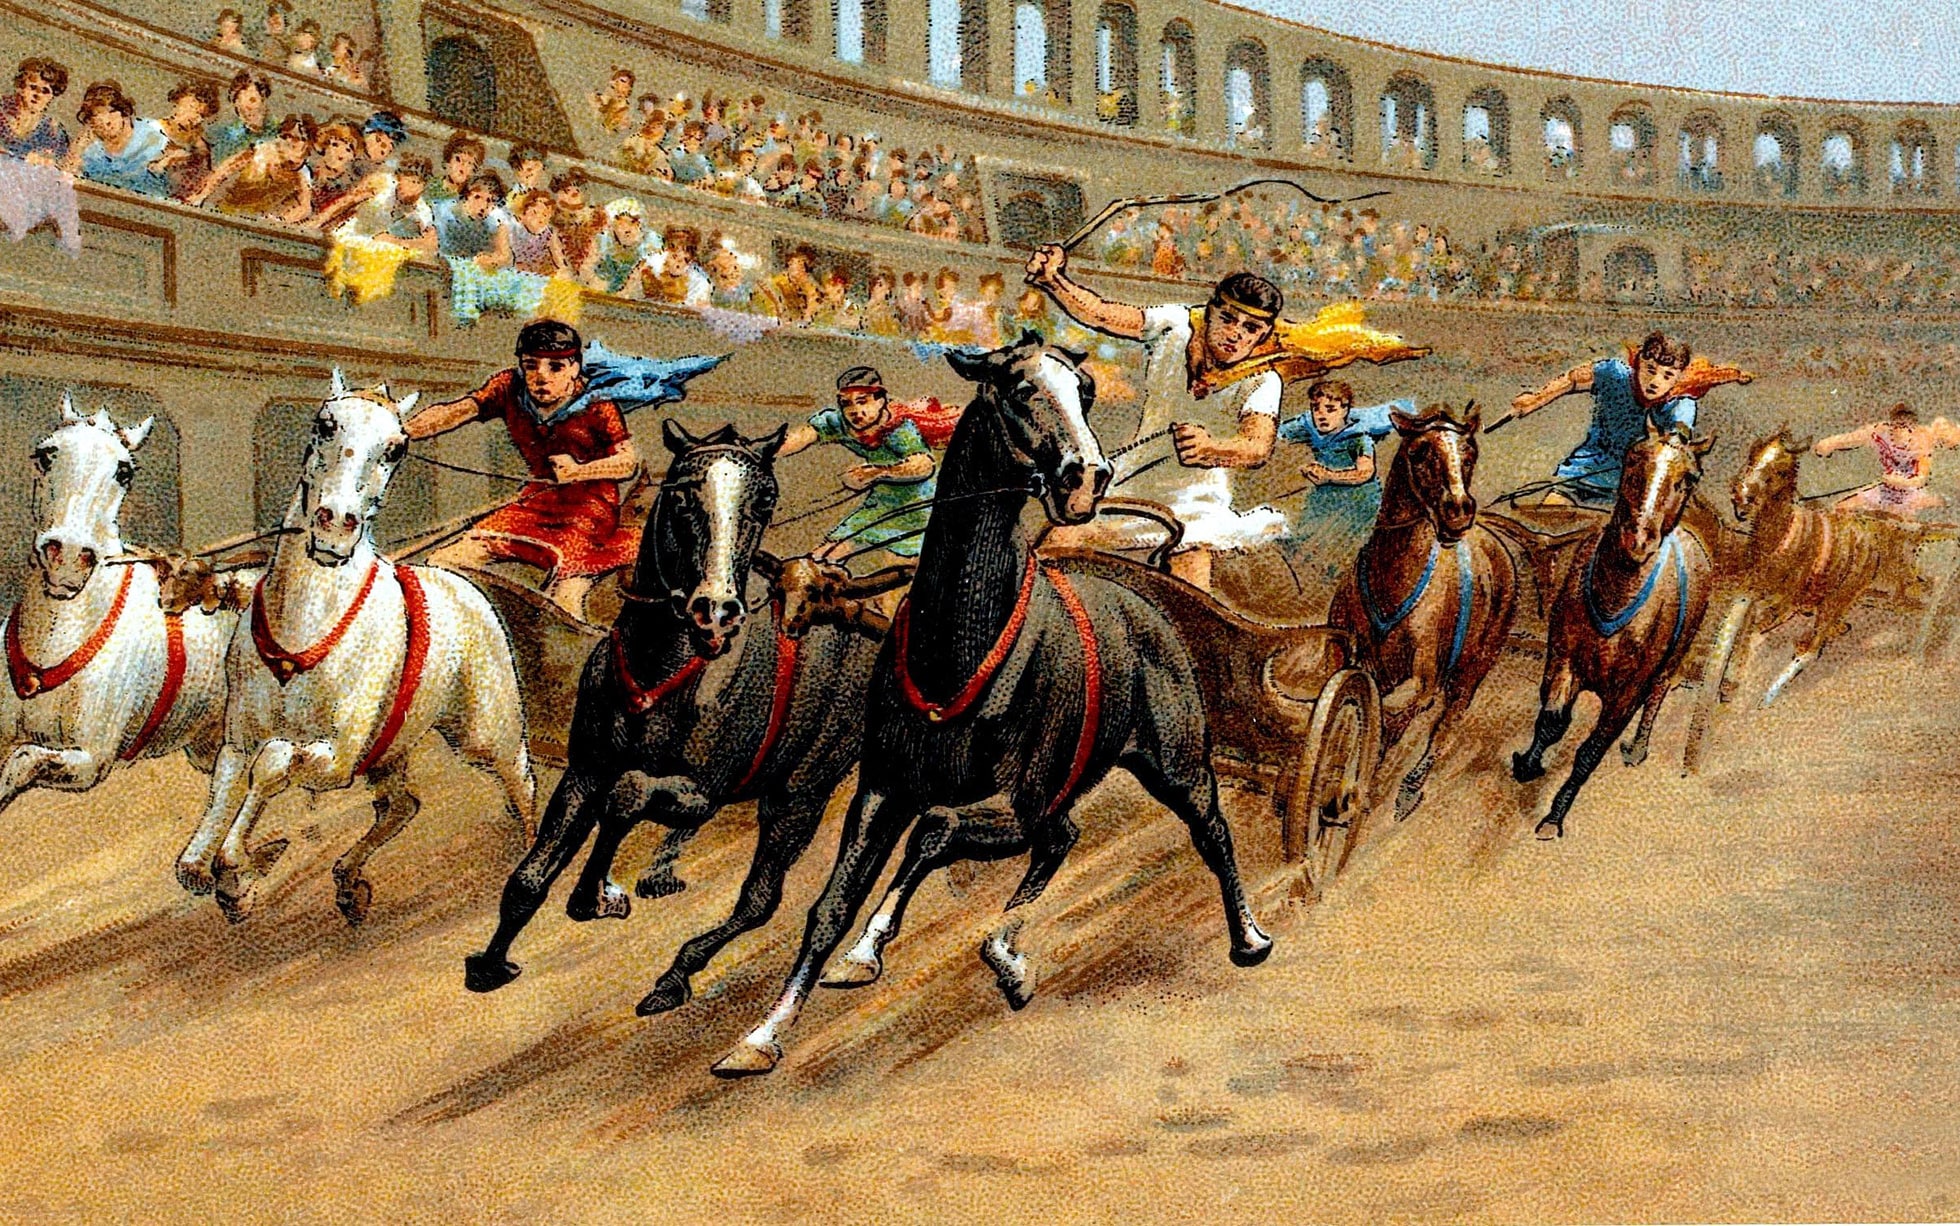 Гонки на древних олимпийских играх. Гонки на колесницах в древнем Риме. Гонки на колесницах в древней Греции. Гонки на колесницах в древней Греции на Олимпийских играх.